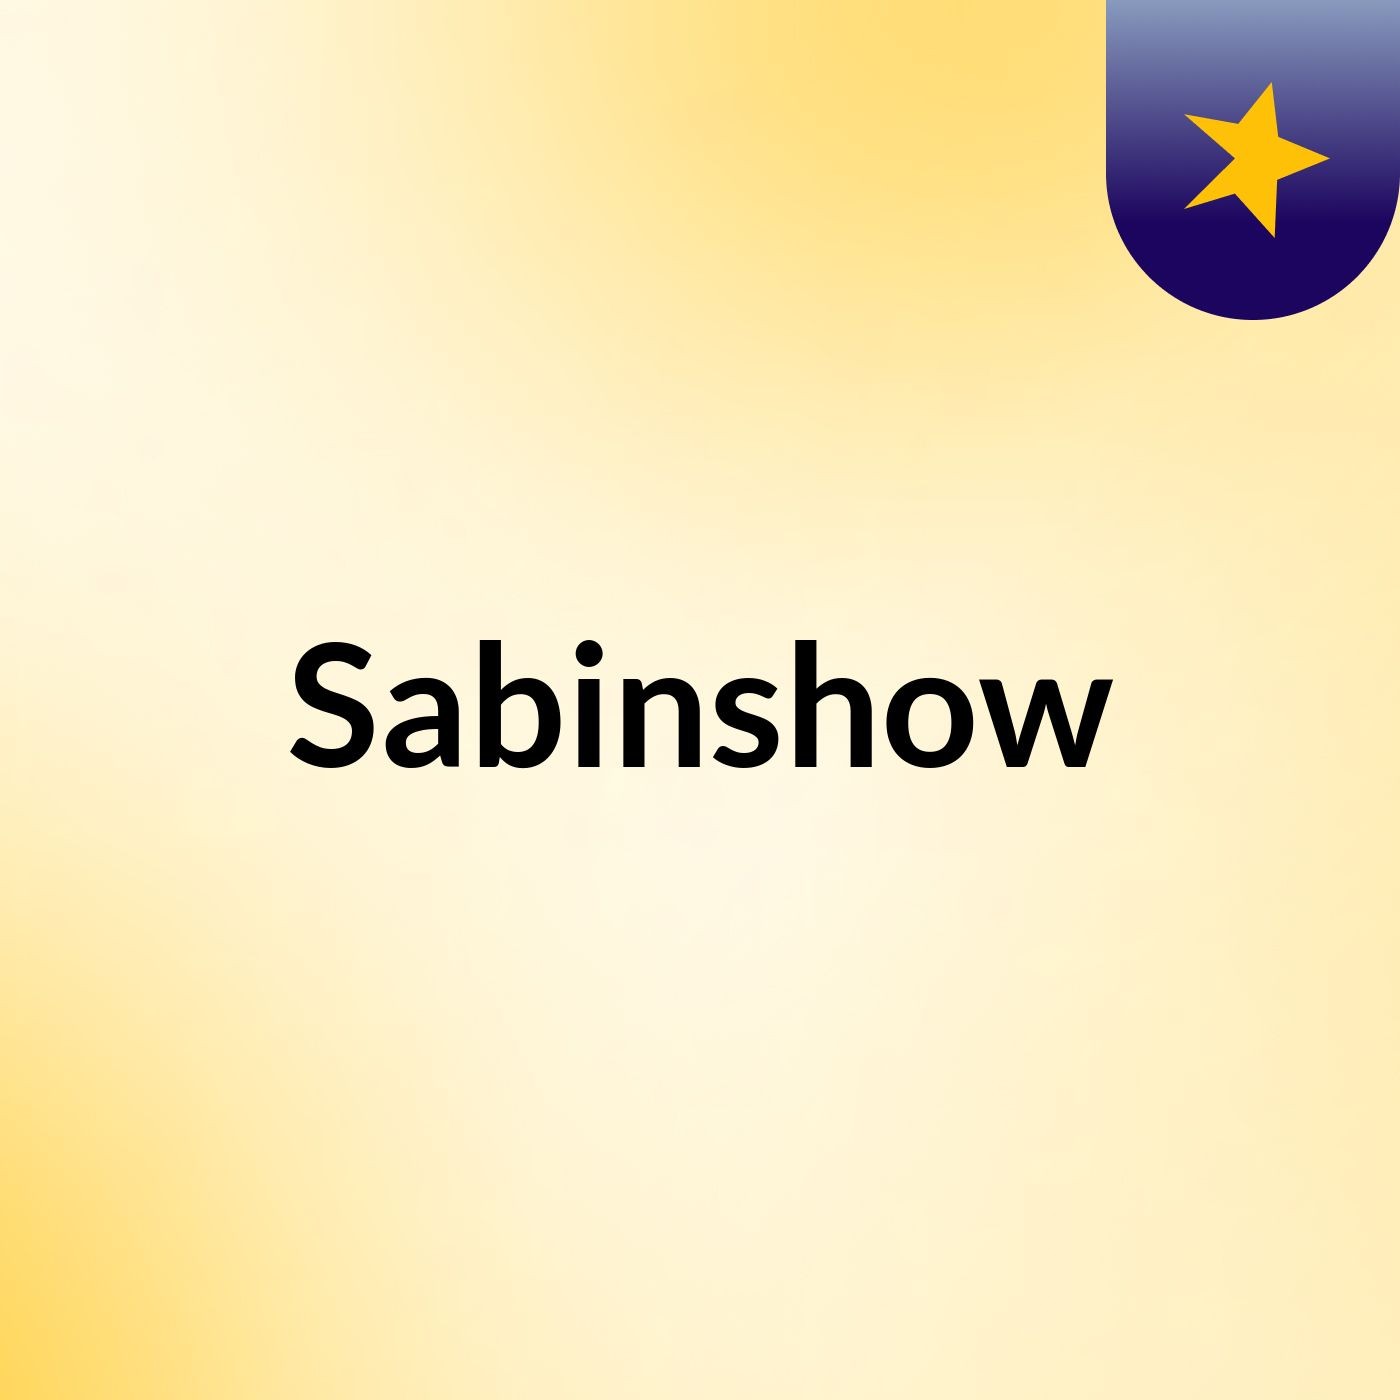 Sabinshow